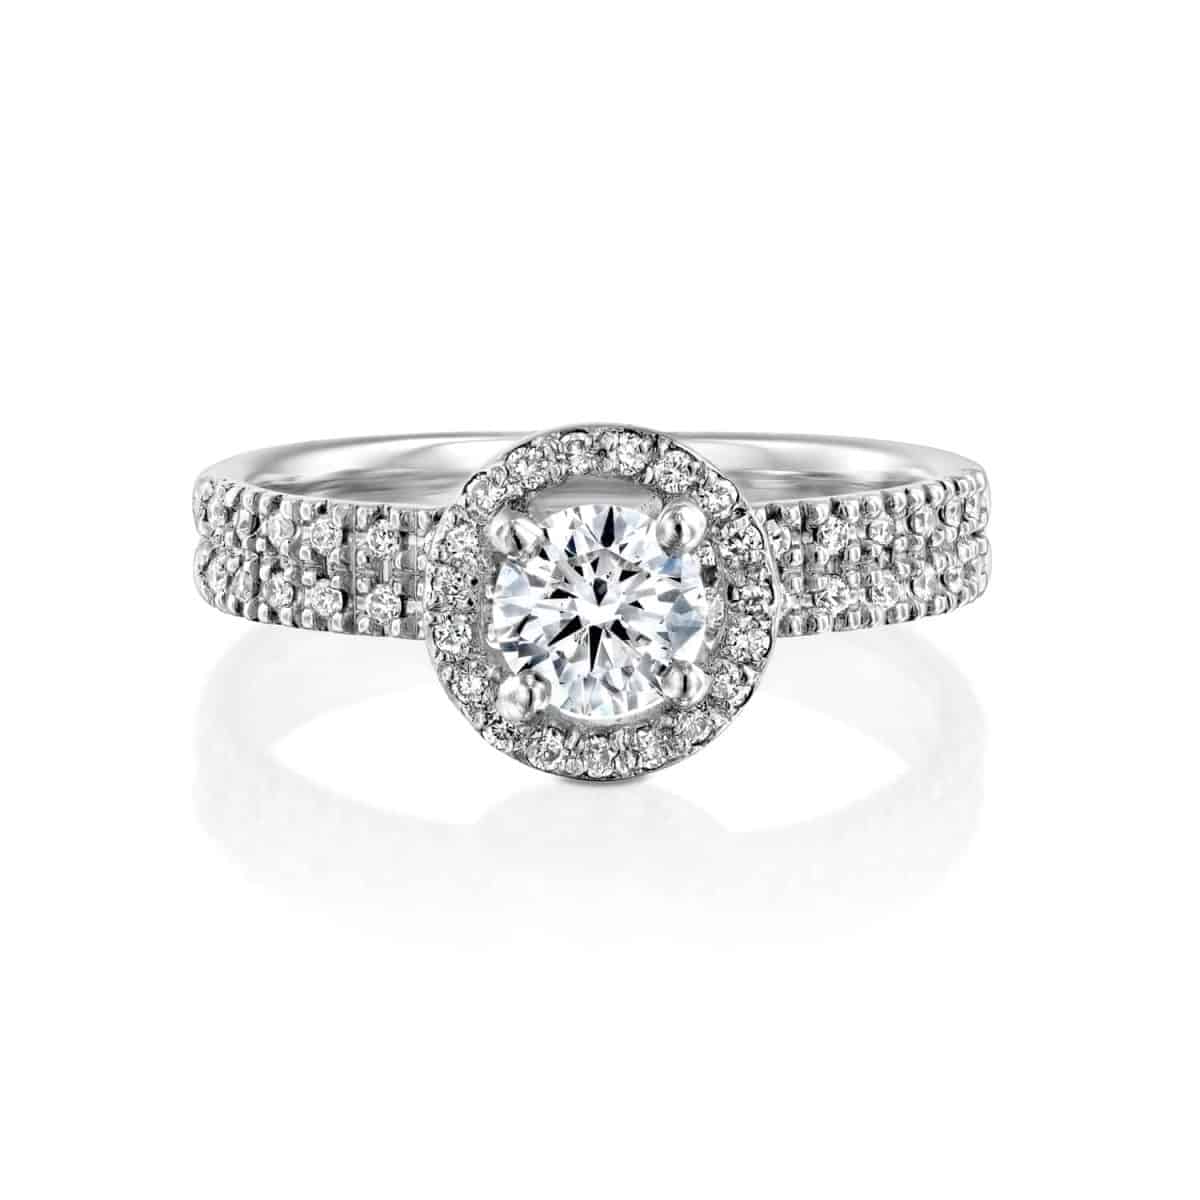 1.41 carat diamond engagement ring "Alexis"